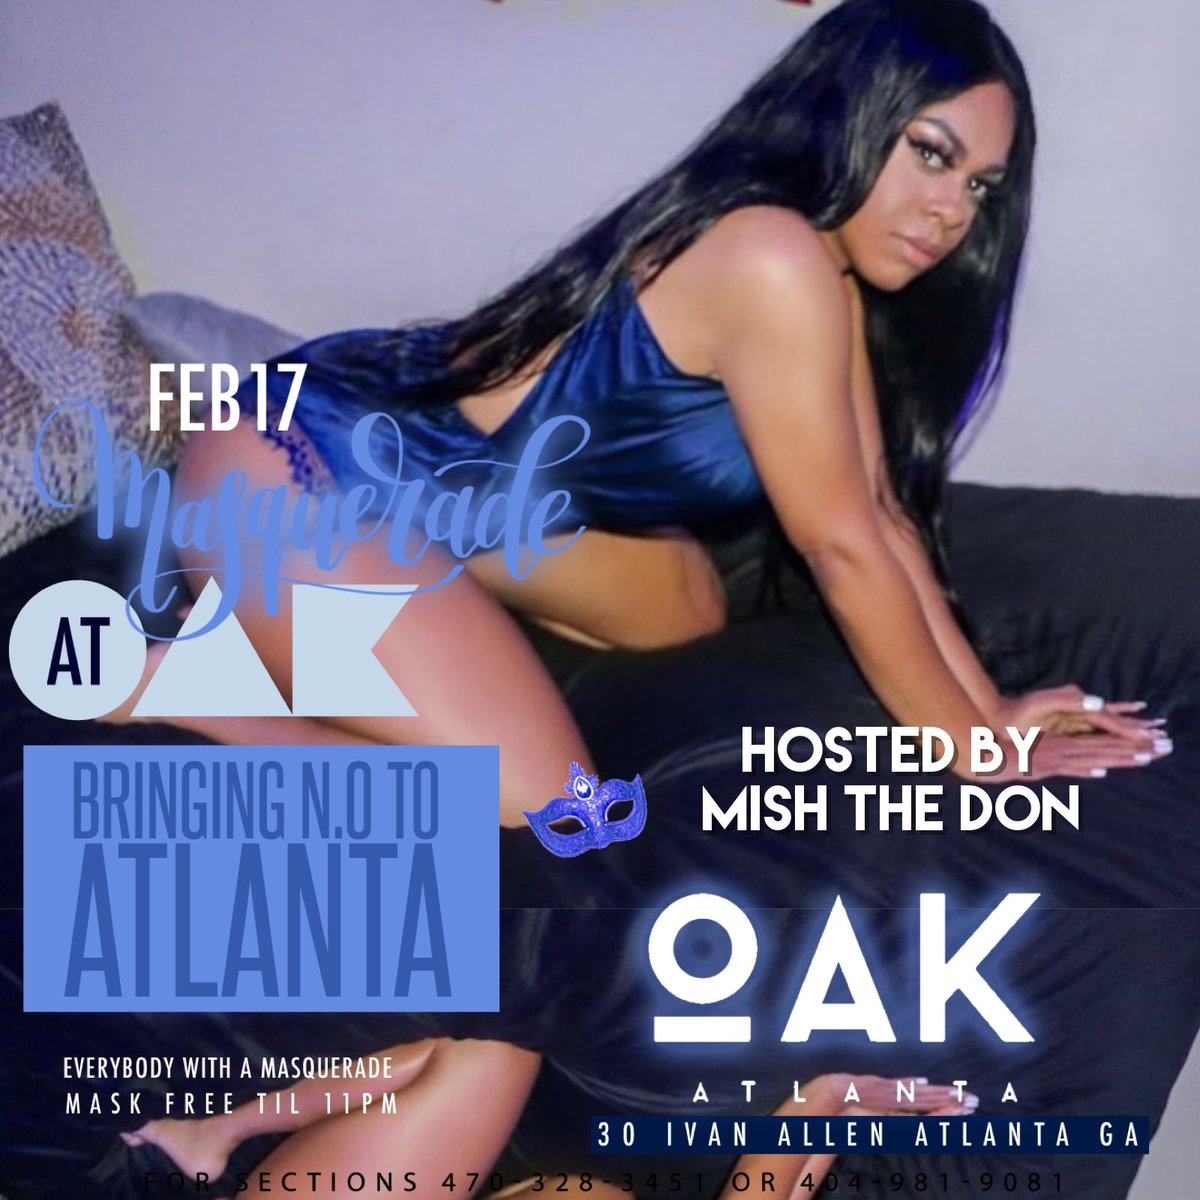 #oakatlanta #oakatl #prettygirlsloveoak #Wednesdayvibe #Atlanta #atlparties #trendingtopic #trendingnow